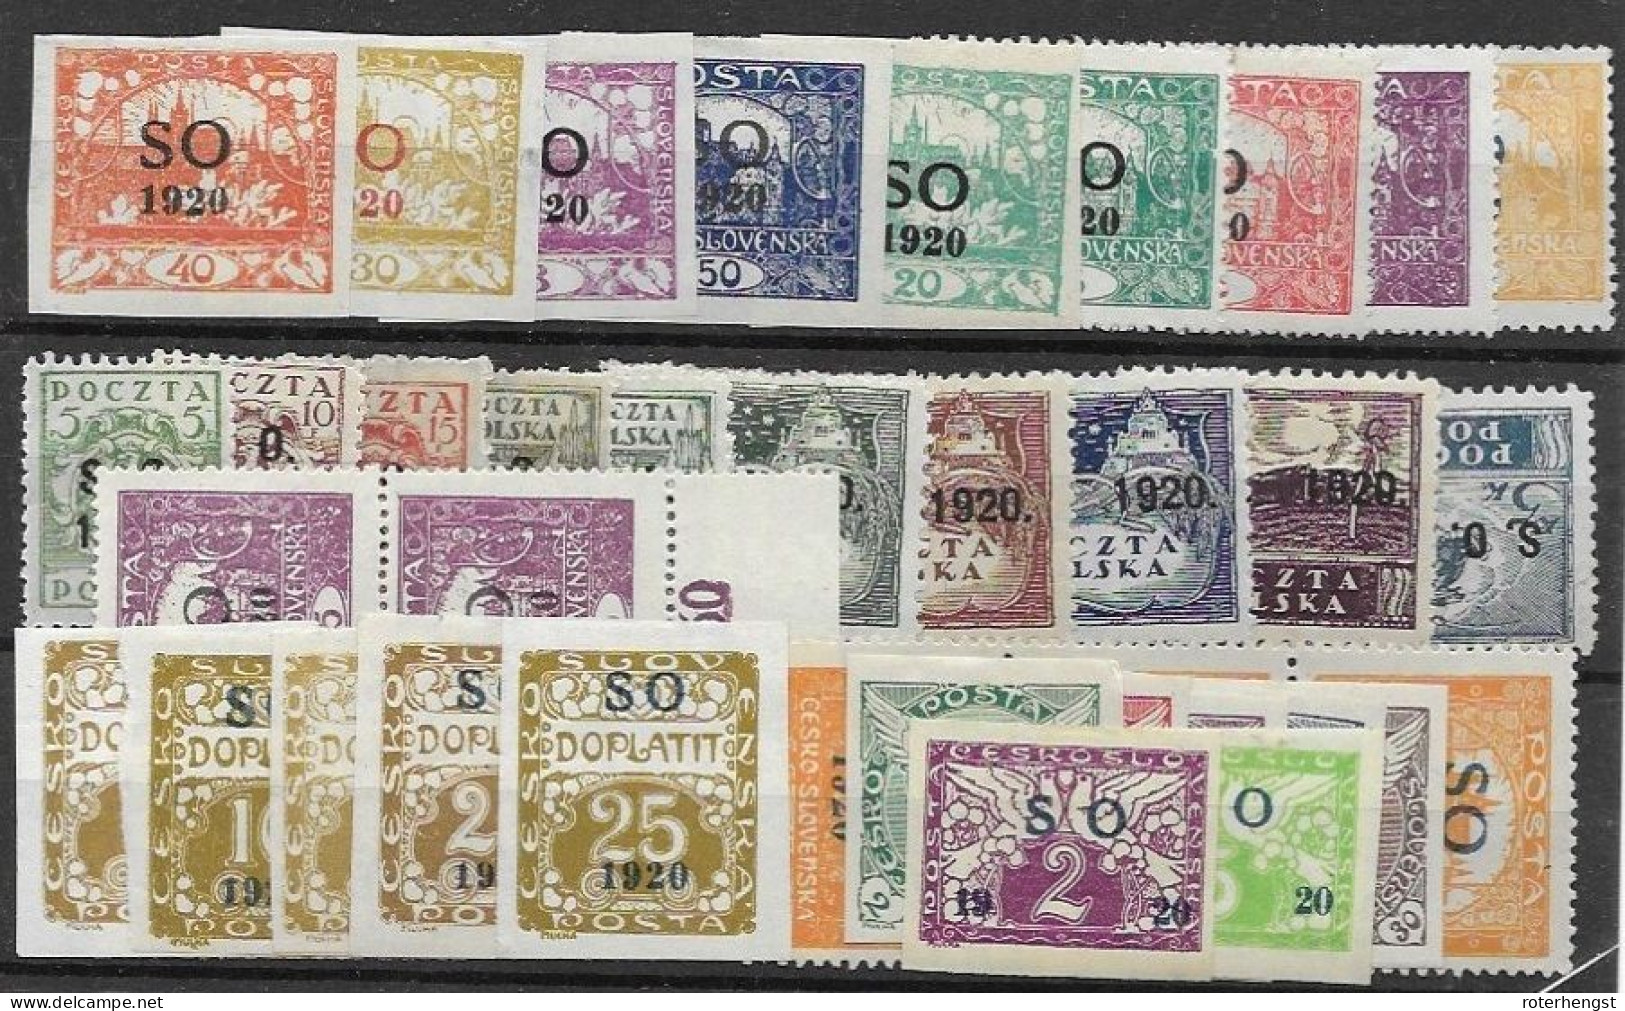 Silesia Schlesien Lot Mh * 10 Euros 1920 36 Stamps (5 Are Mnh **, 1 Has No Gum) - Schlesien